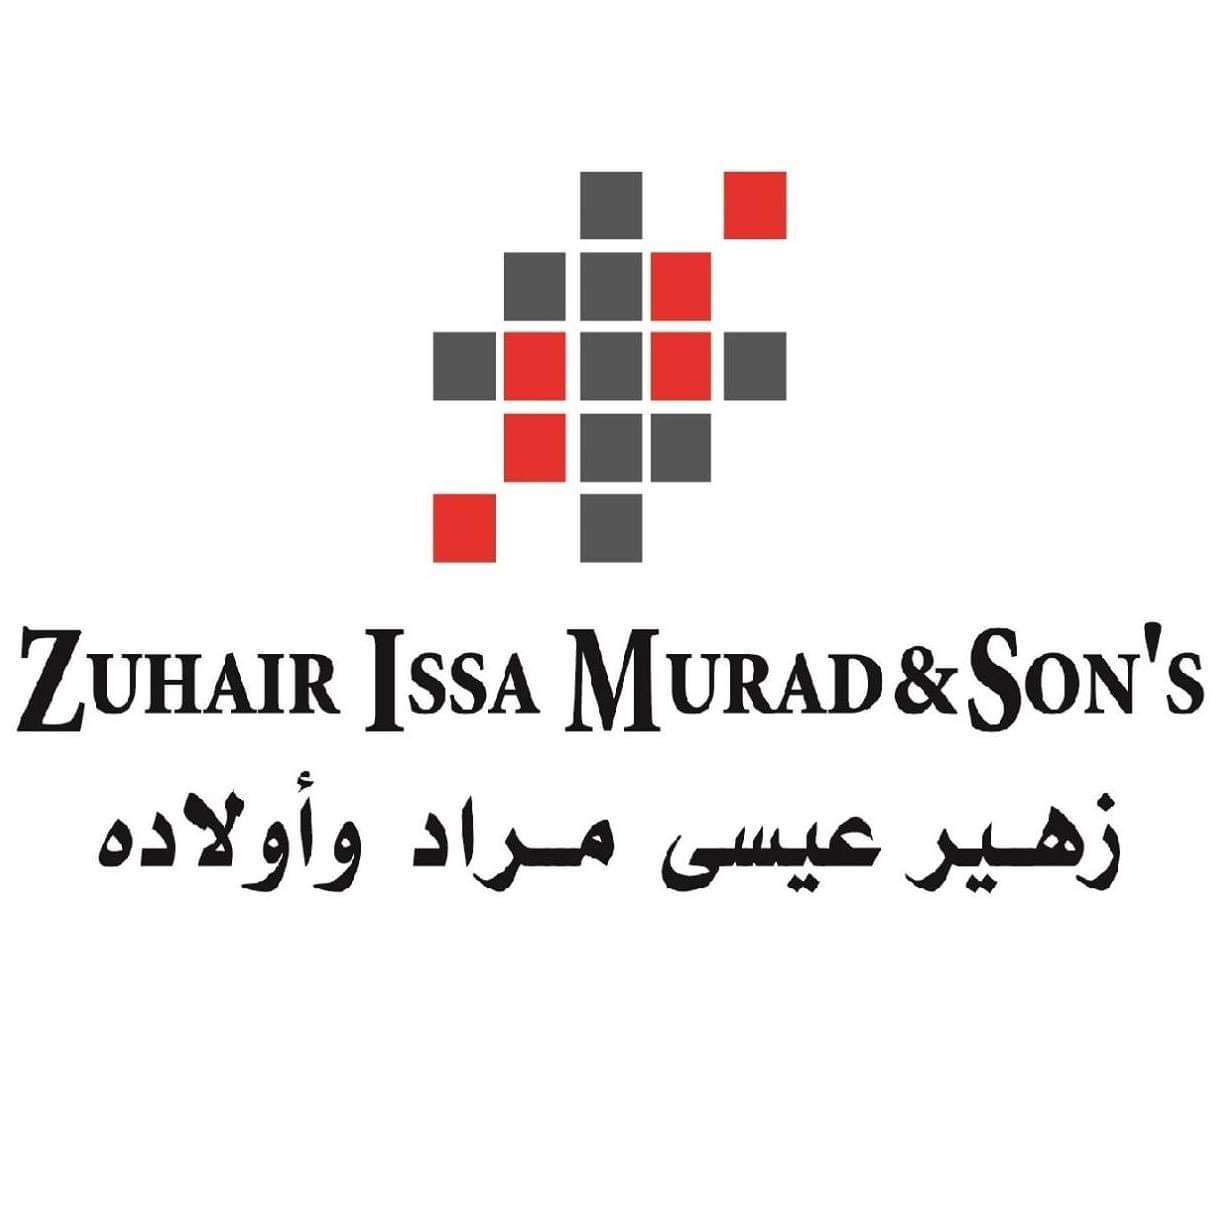 zuhair murad